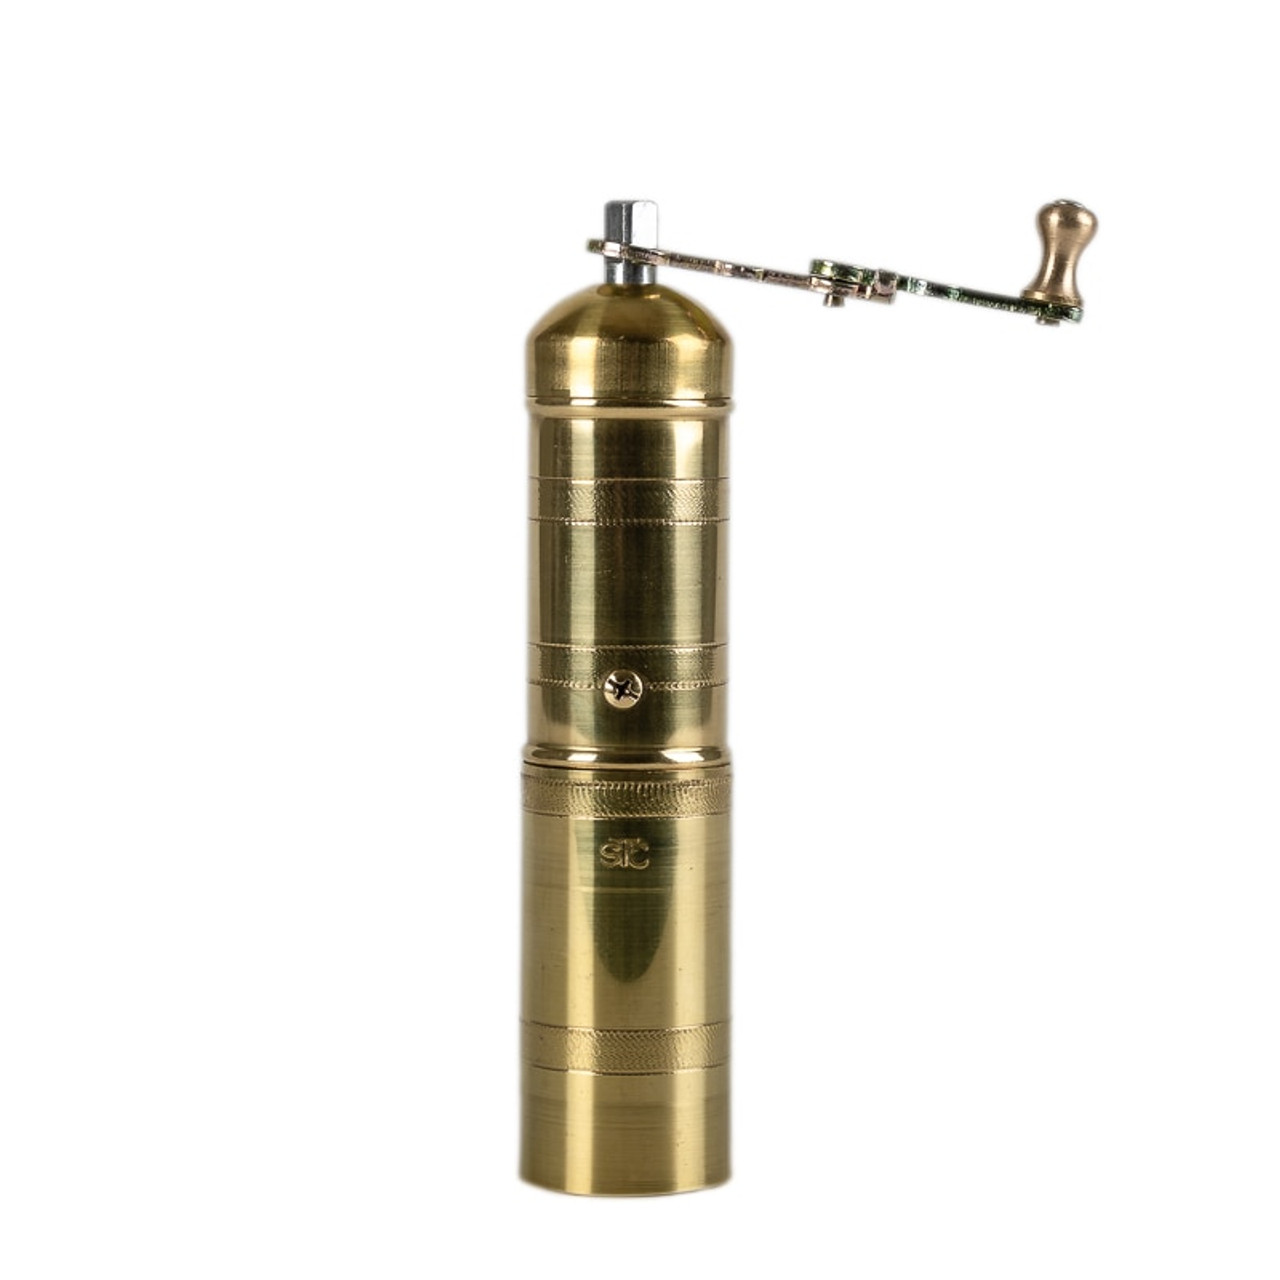 Ottoman motifs spice Copper coffee grinder